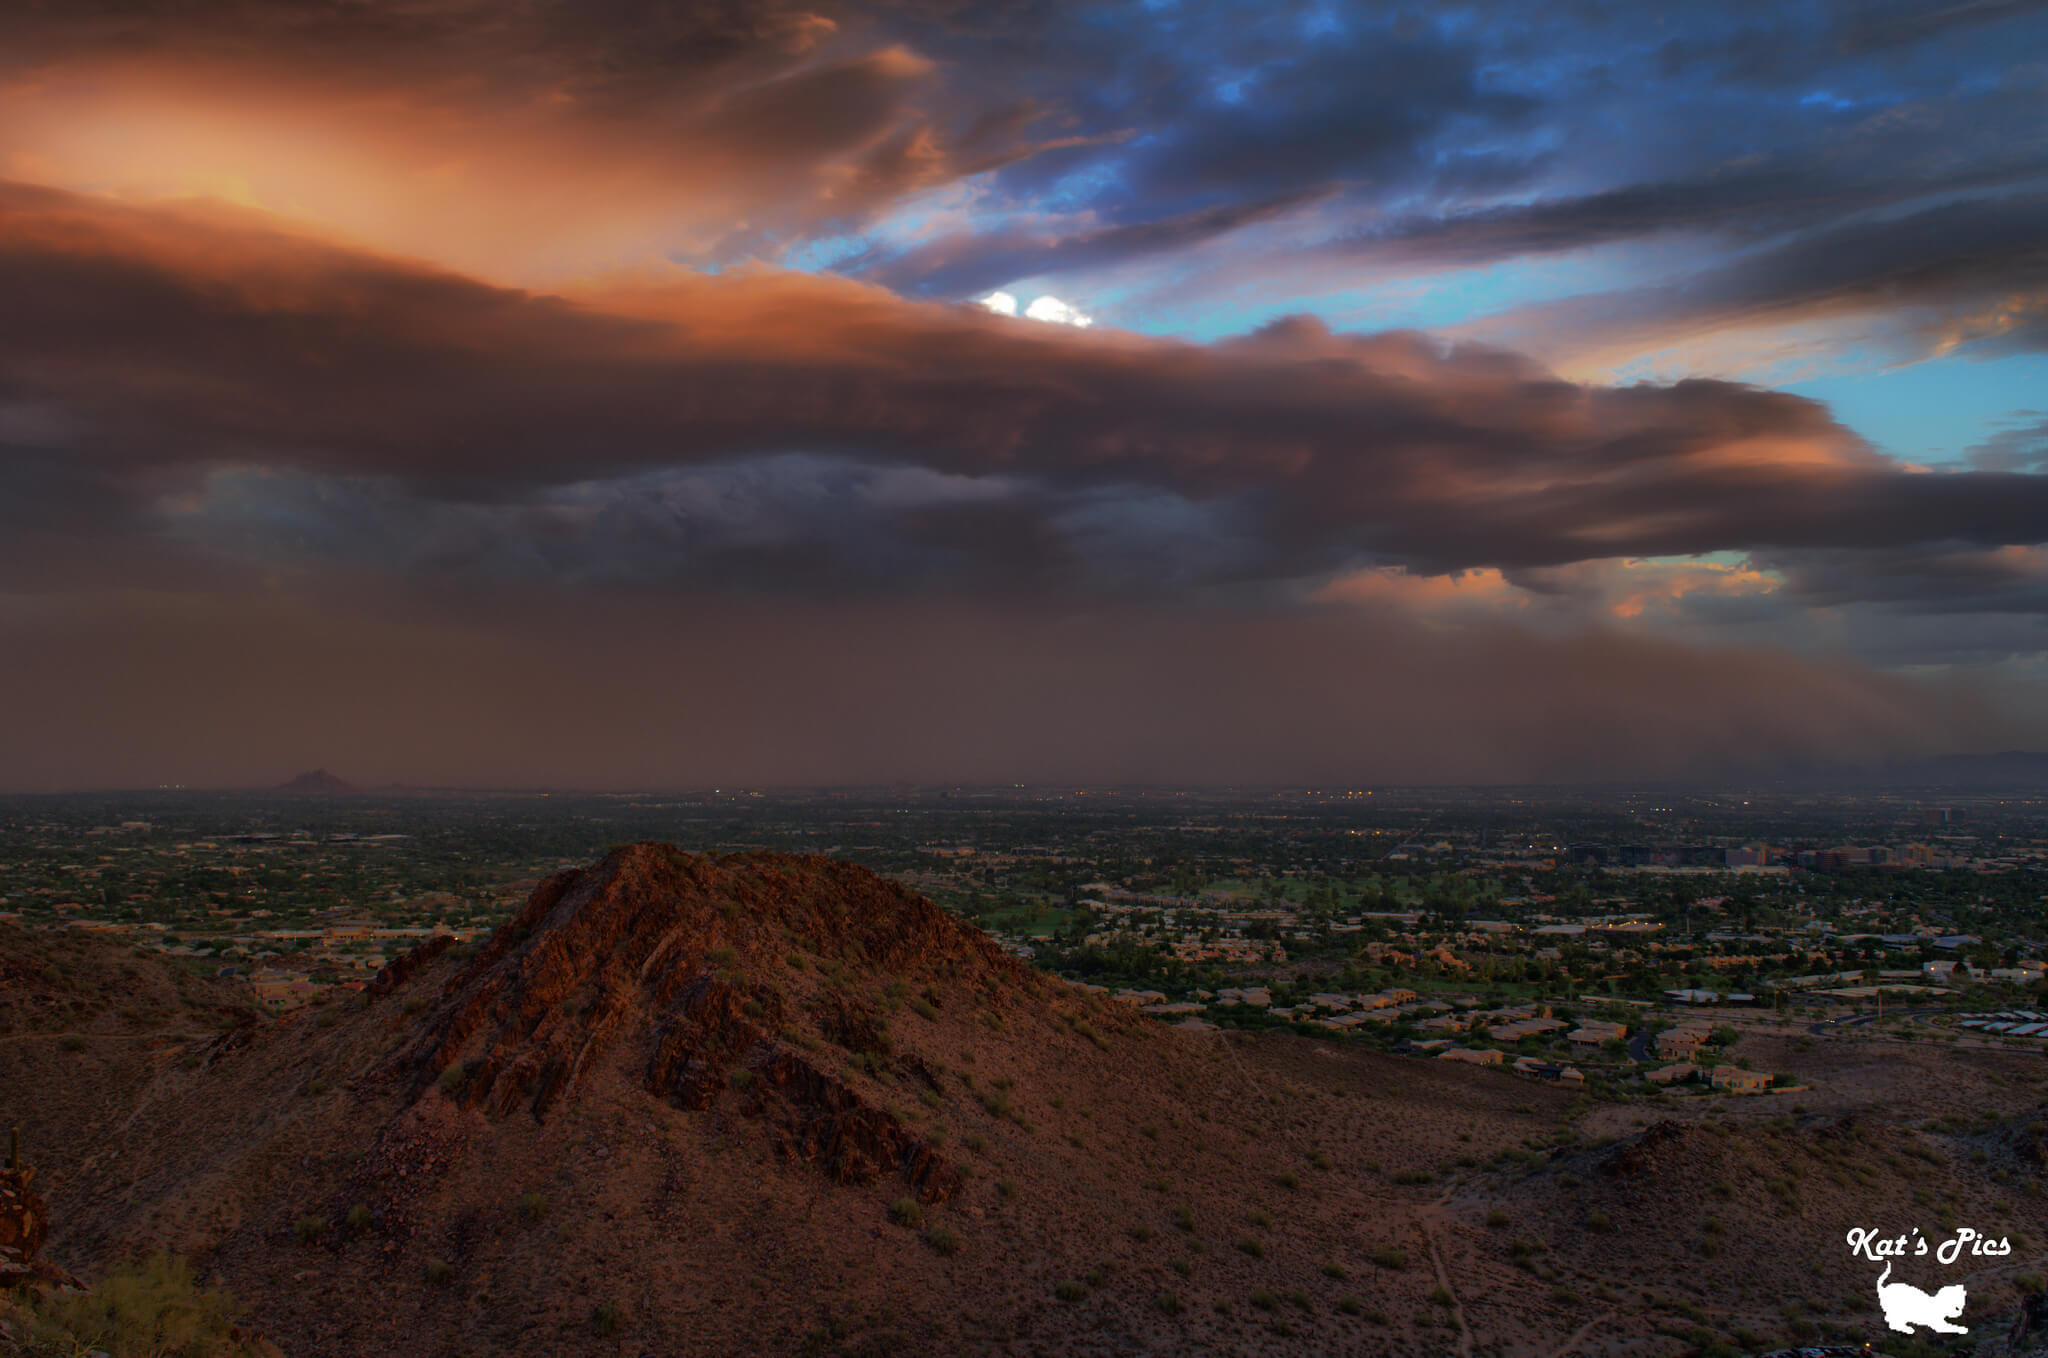 A dust storm brewing above South Mountain in Phoenix. Arizona.
Flickr User Katheryn Navas